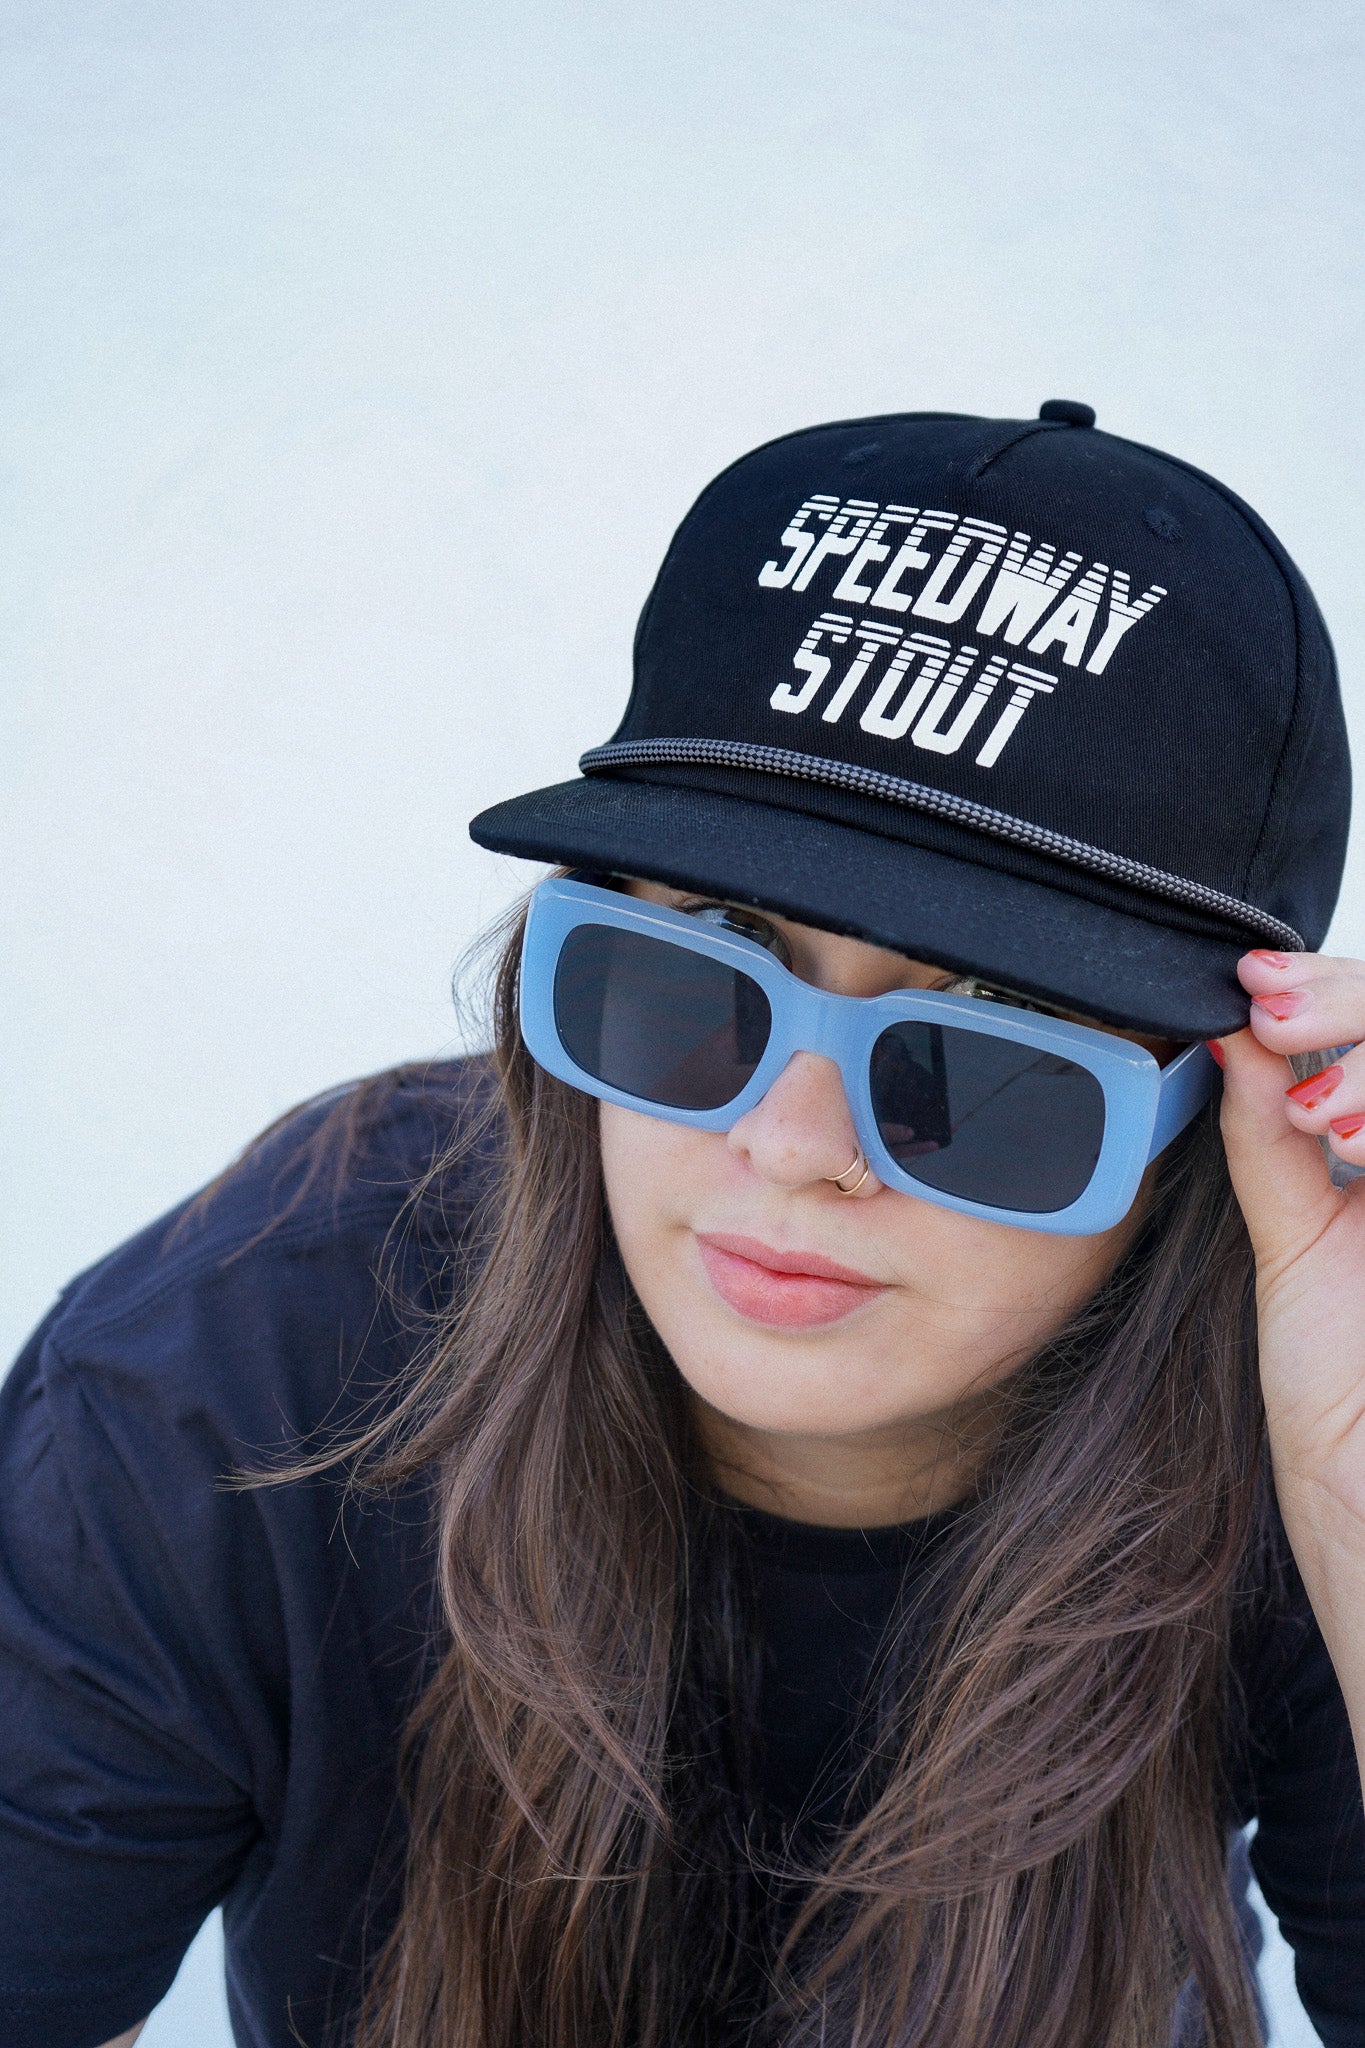 Speedway Stout Hat - Black